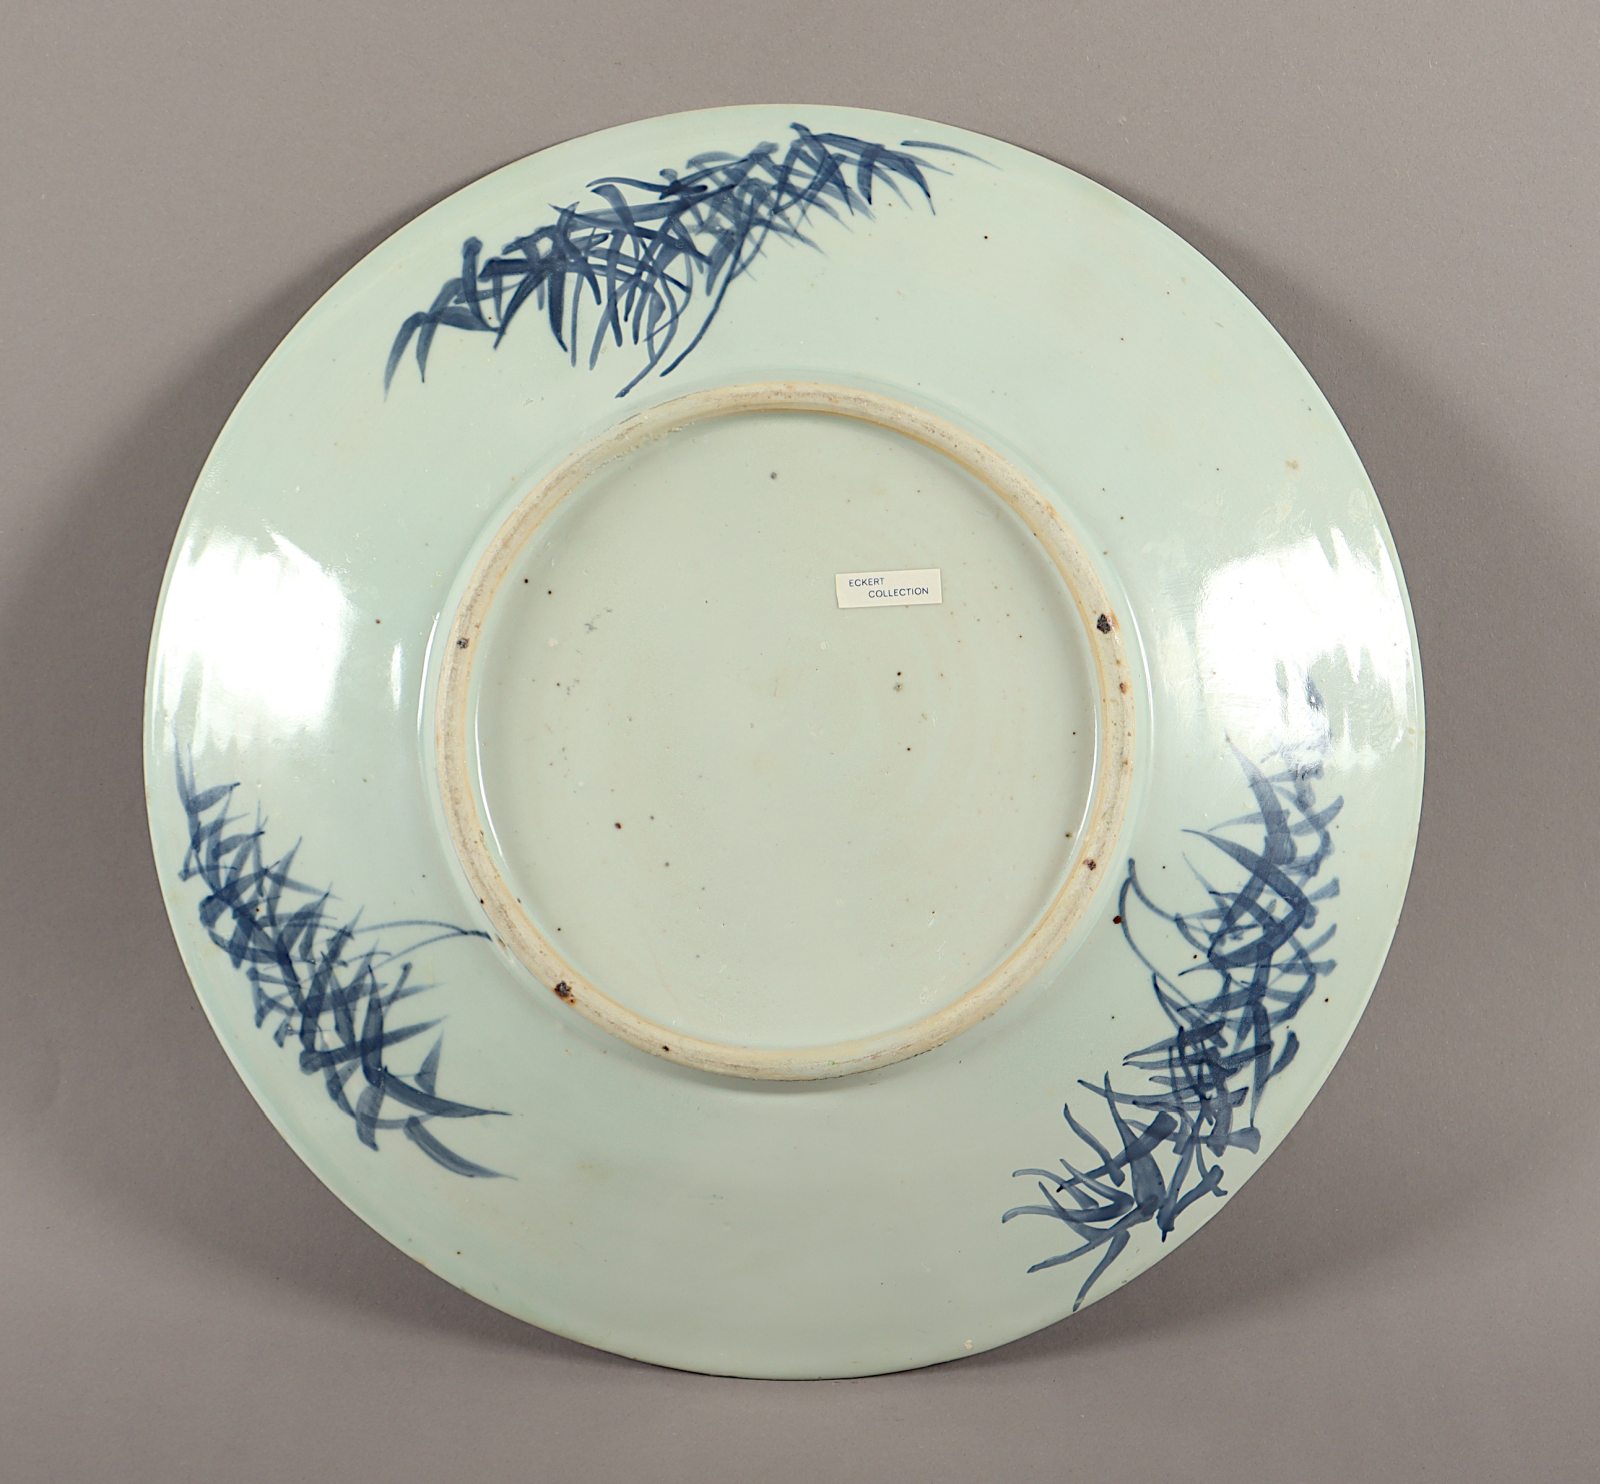 Teller, Porzellan, Unterglasurblau dekoriert, China, 19.Jh. - Image 2 of 2